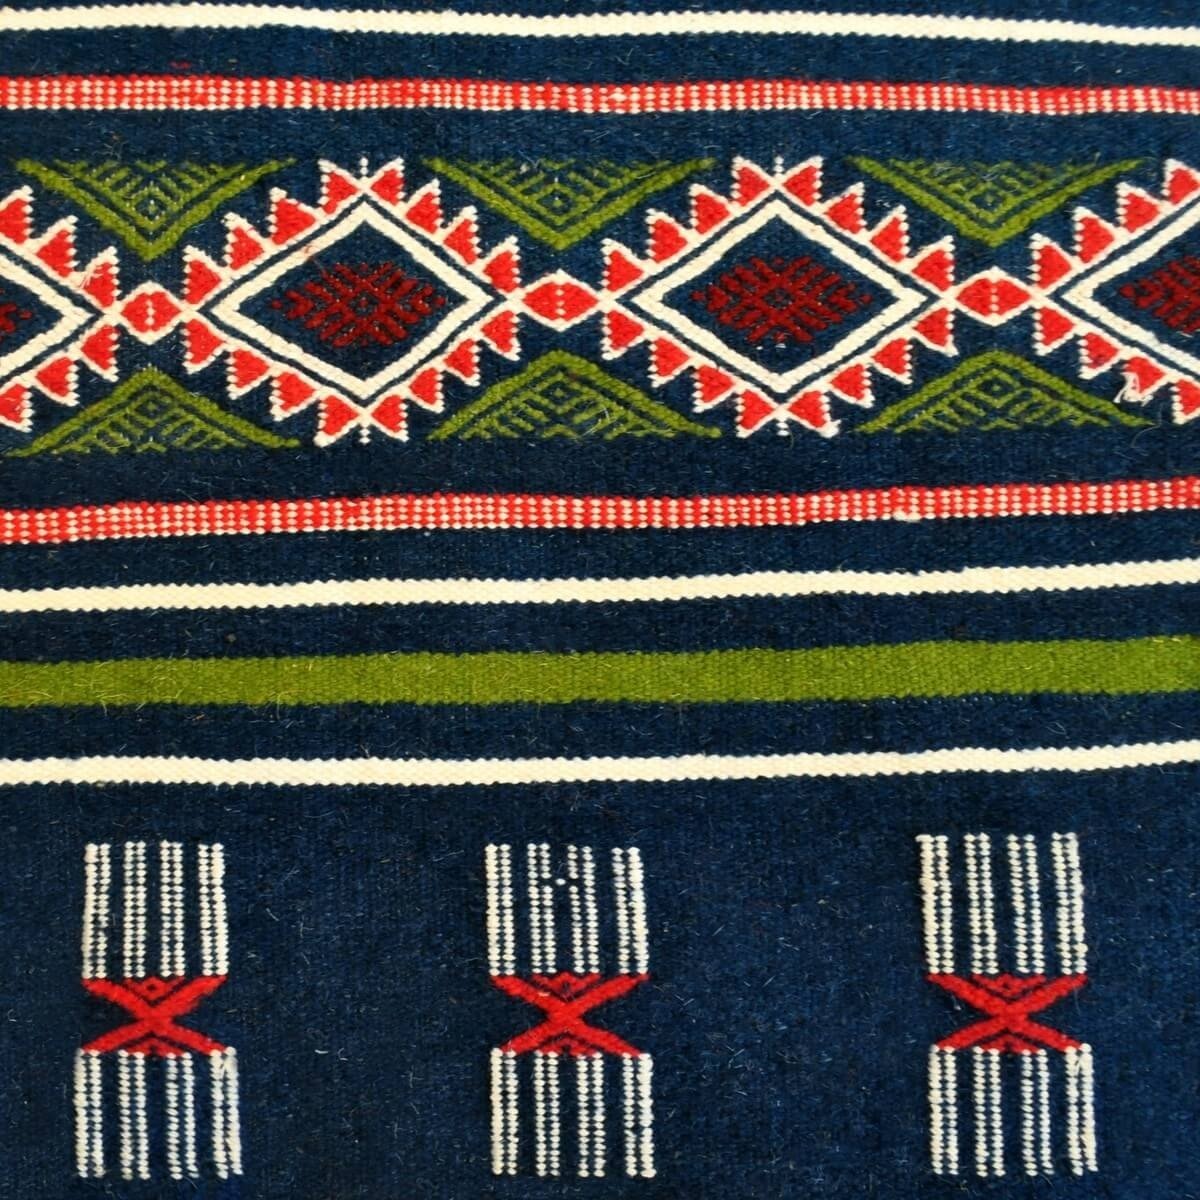 Berber tapijt Tapijt Kilim Tajrouine 115x200 Blauw/Groen/Rood (Handgeweven, Wol, Tunesië) Tunesisch kilimdeken, Marokkaanse stij